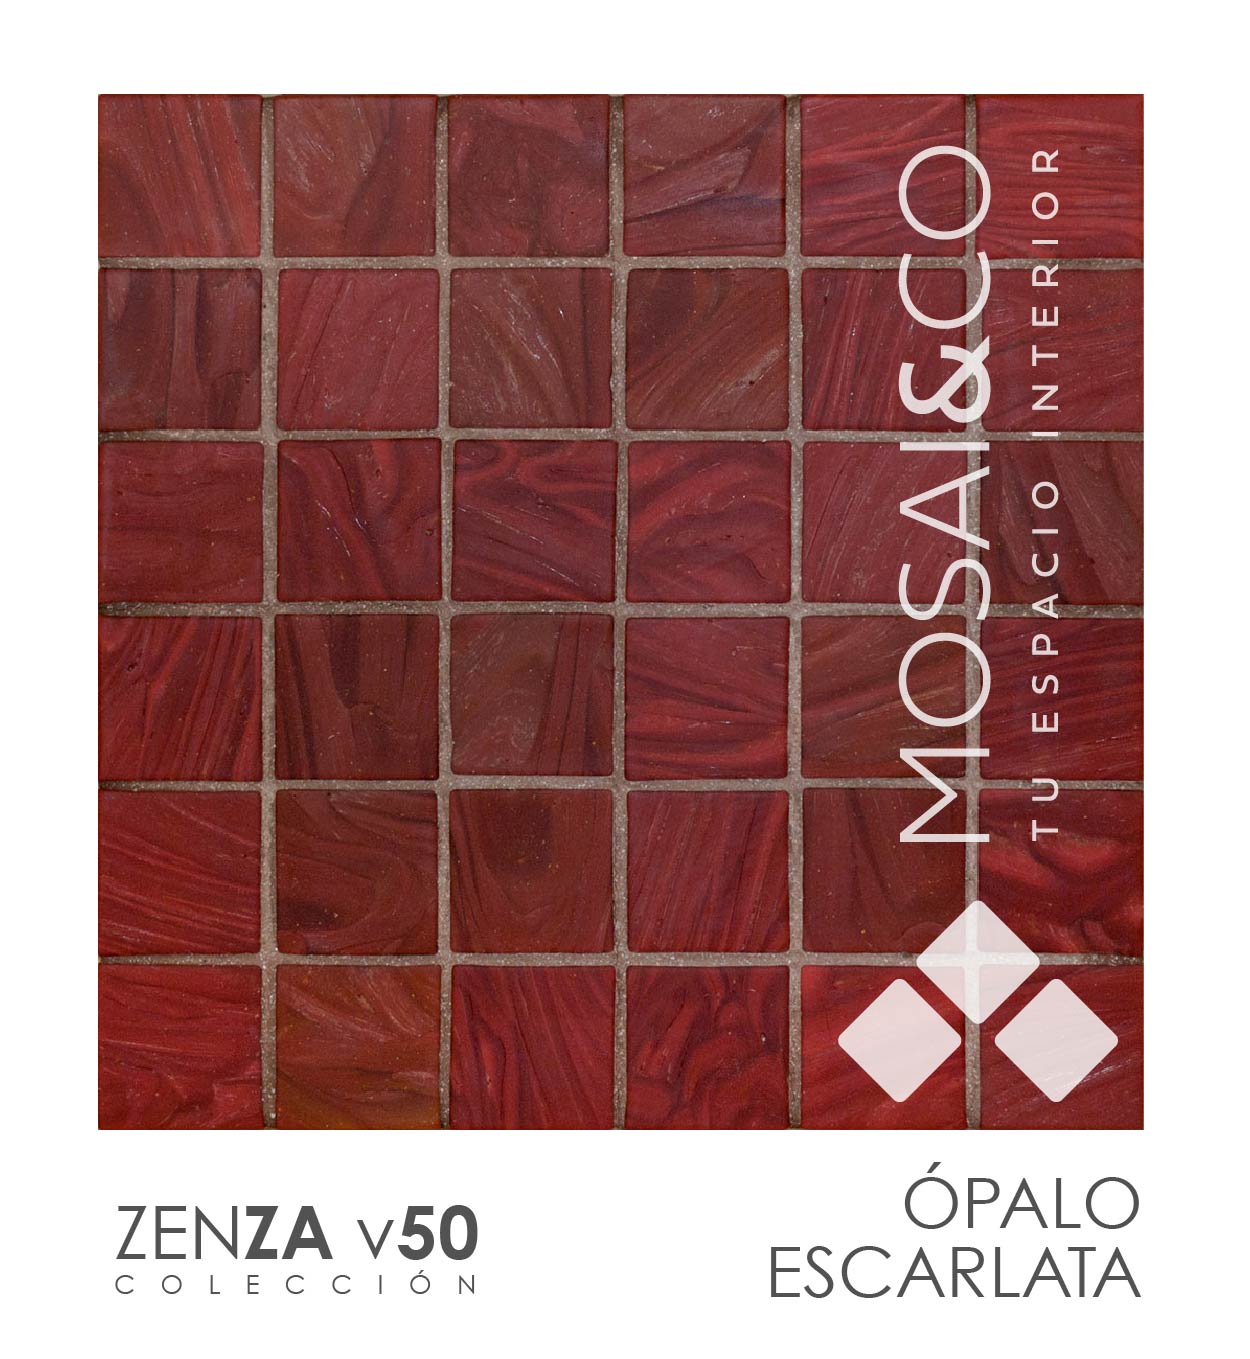 mosaico-decoracion-interiores-mosaiandco-coleccion-zenza-v50_opalo-escarlata